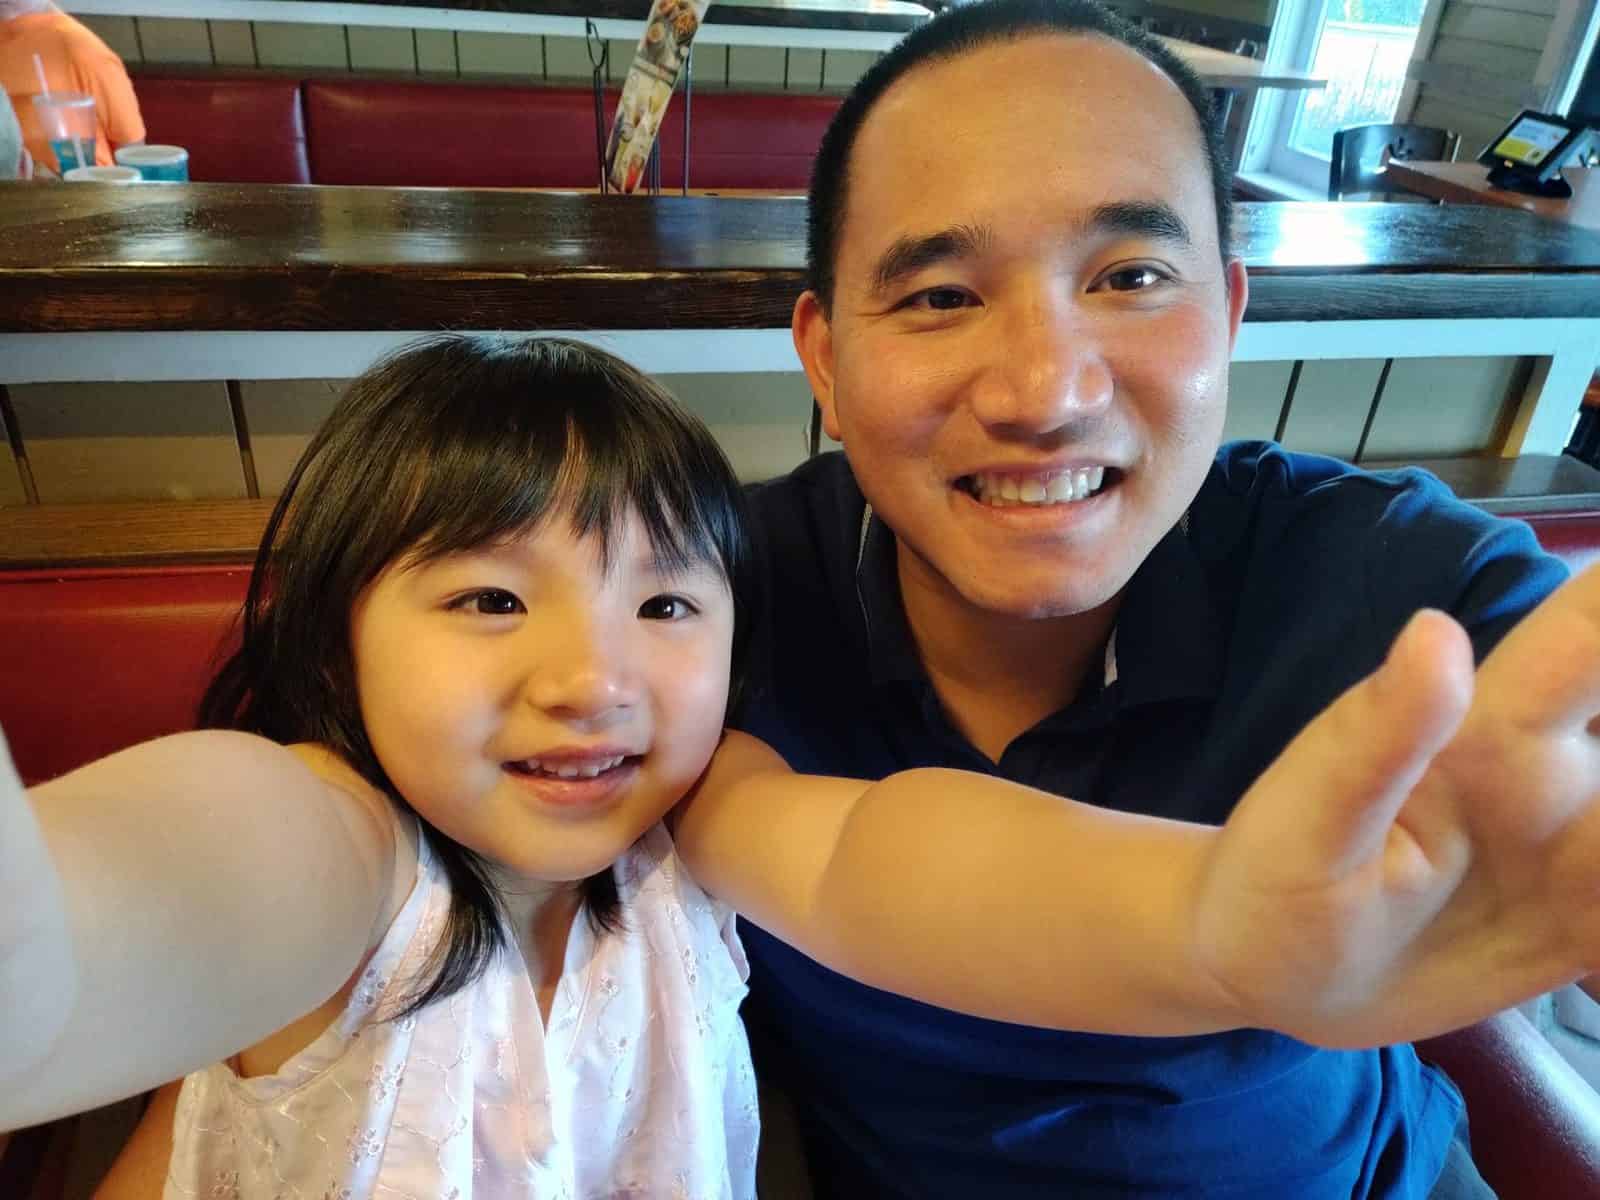 Dad and daughter selfie